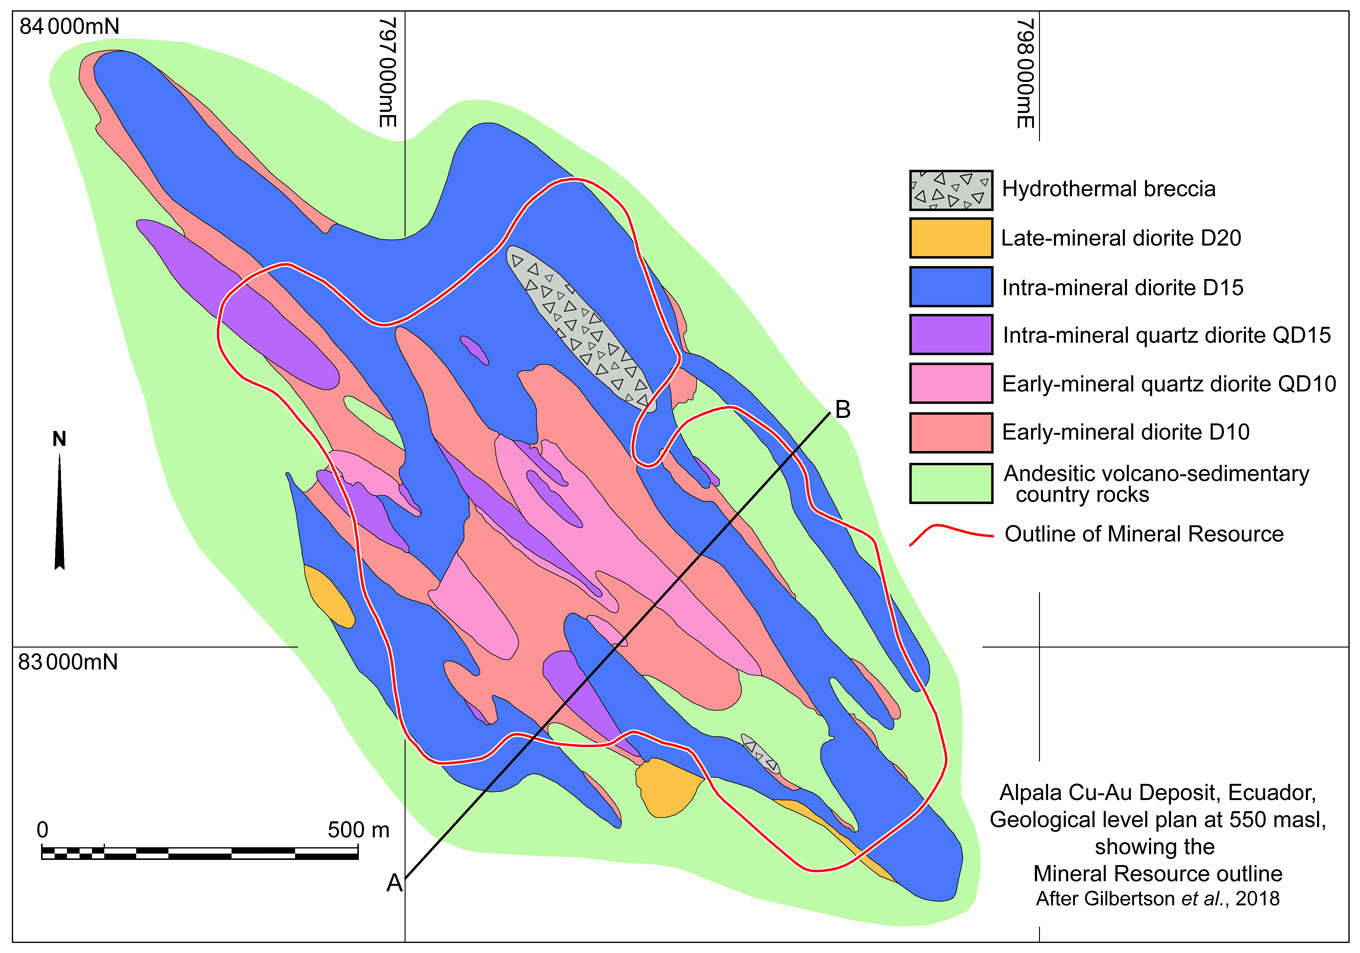 Alpala Geology Plan